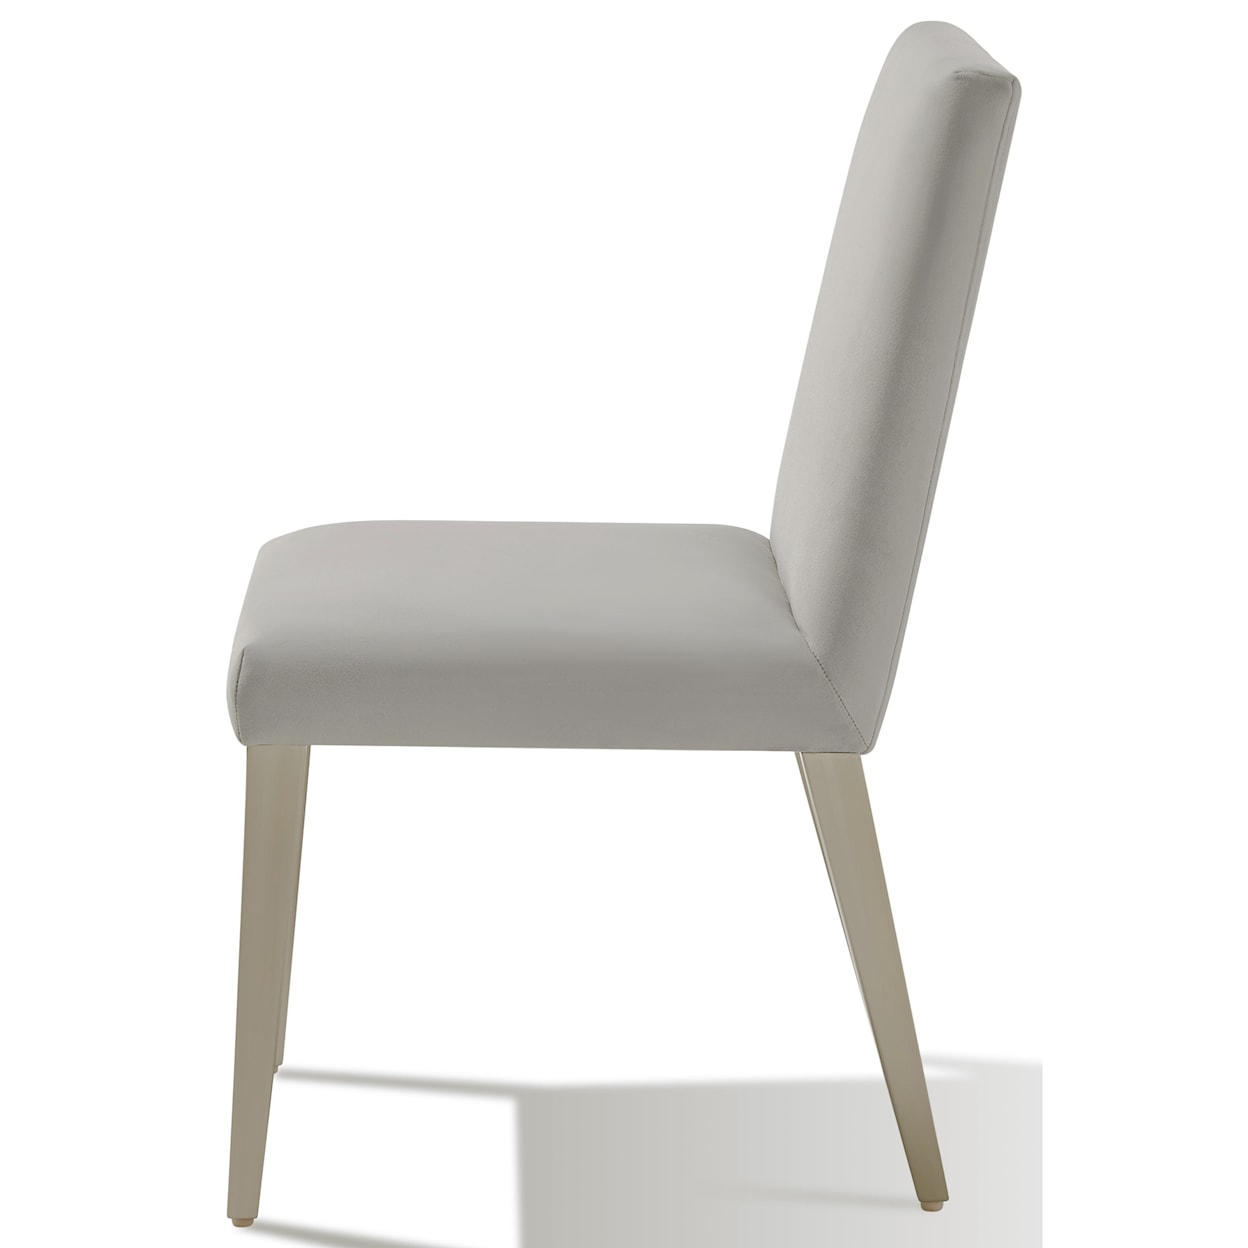 Modus International Omnia Chair - Smoke/Brushed Stainless Steel